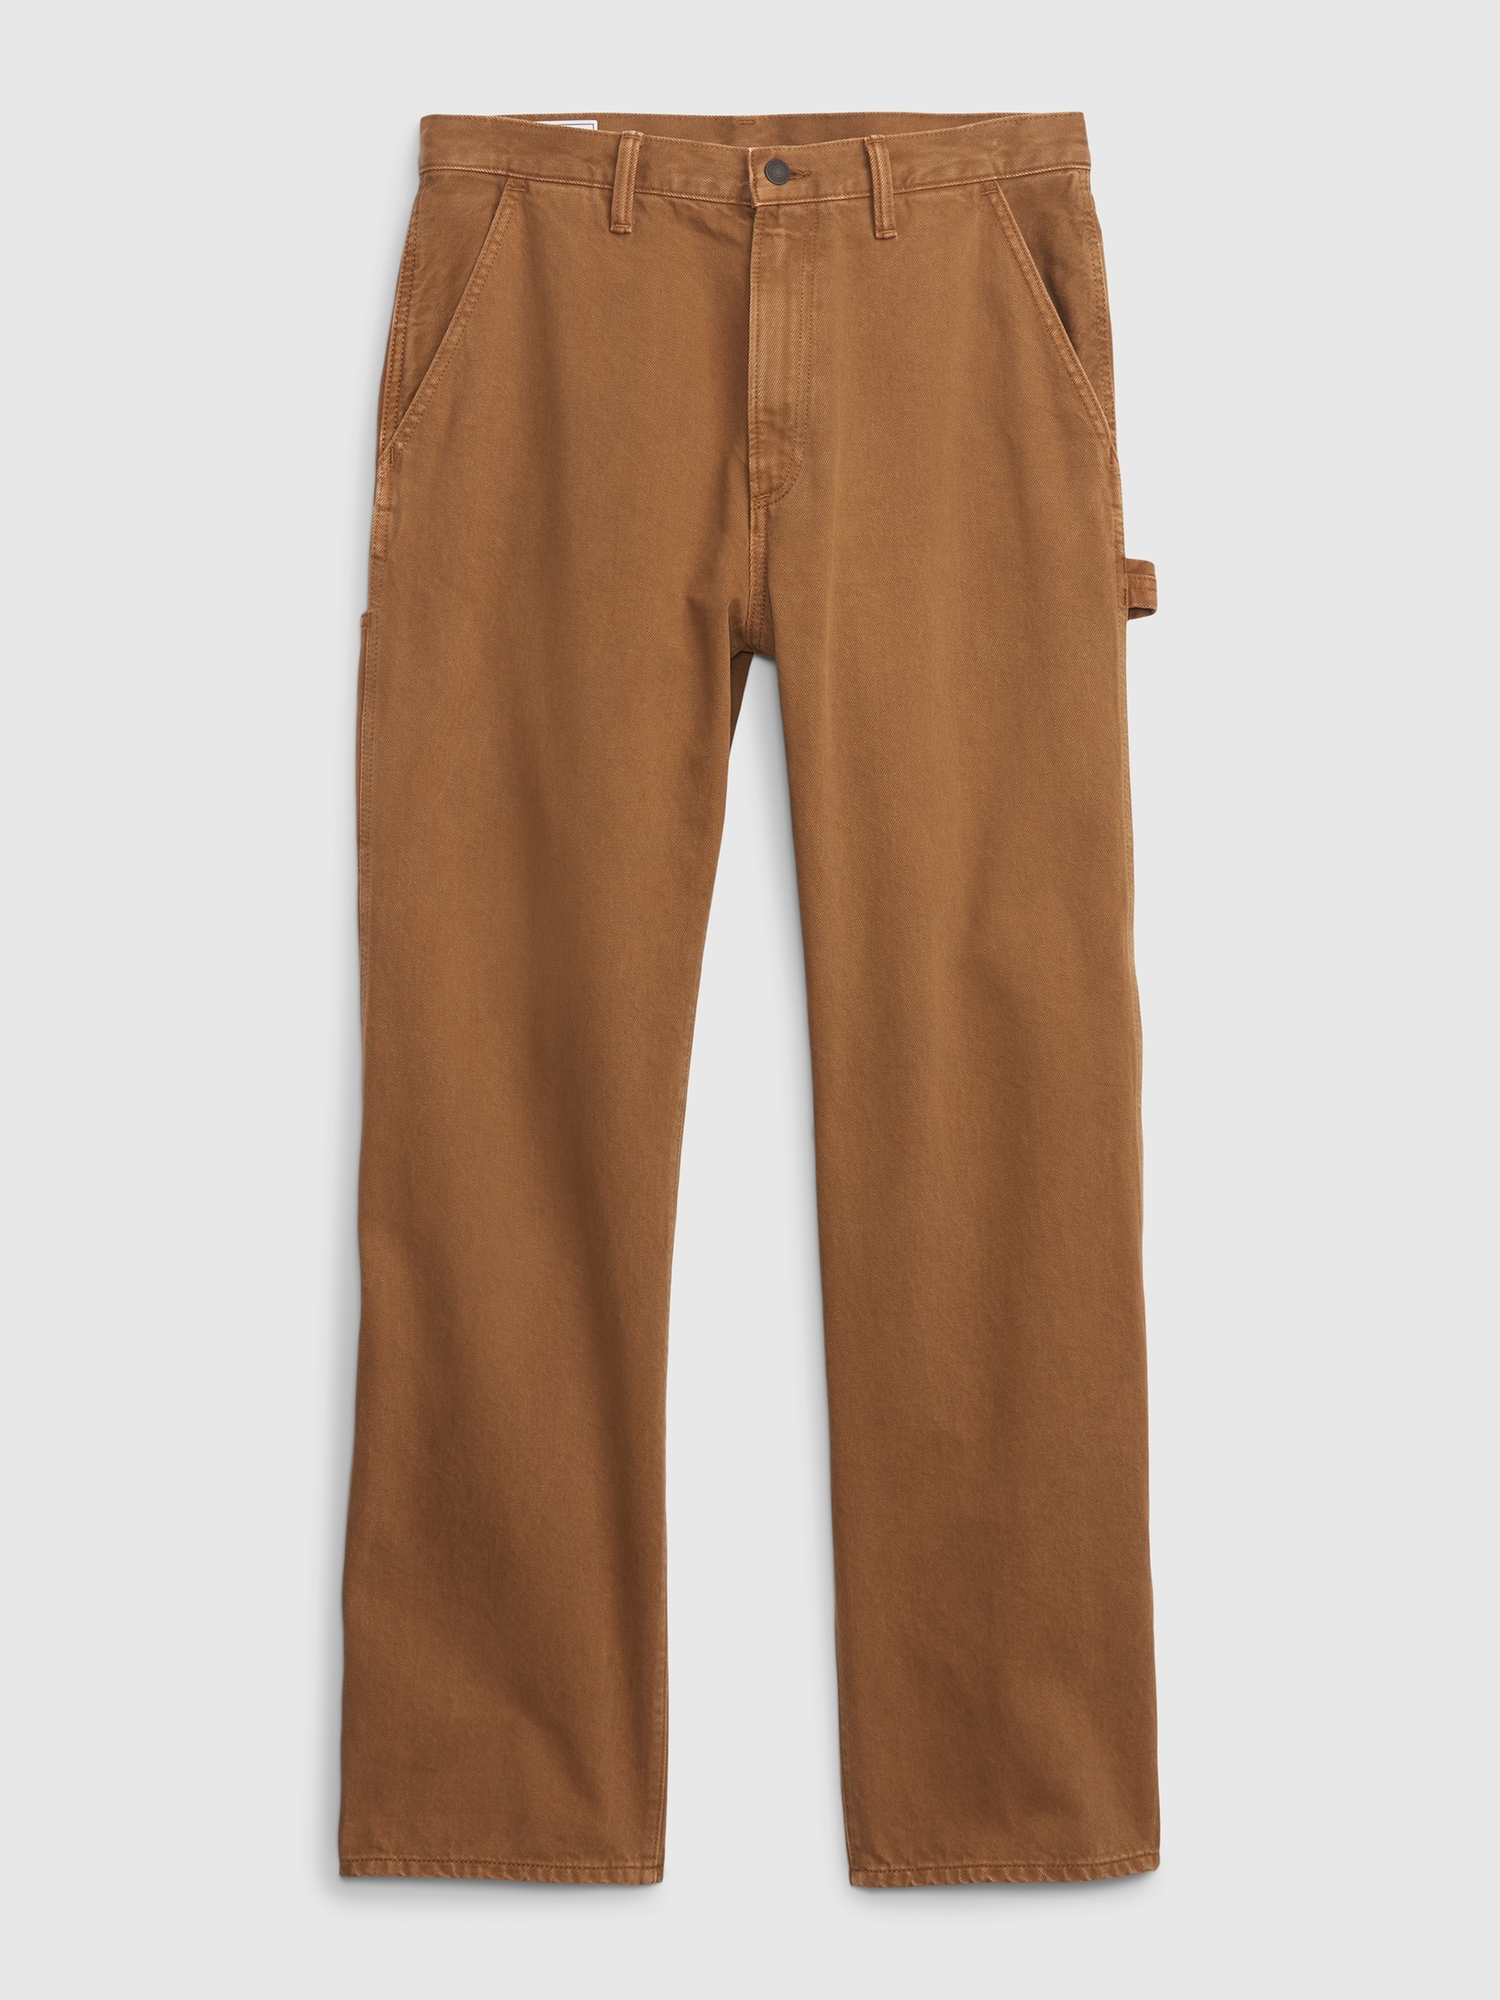 '90s Loose Carpenter Jeans | Gap